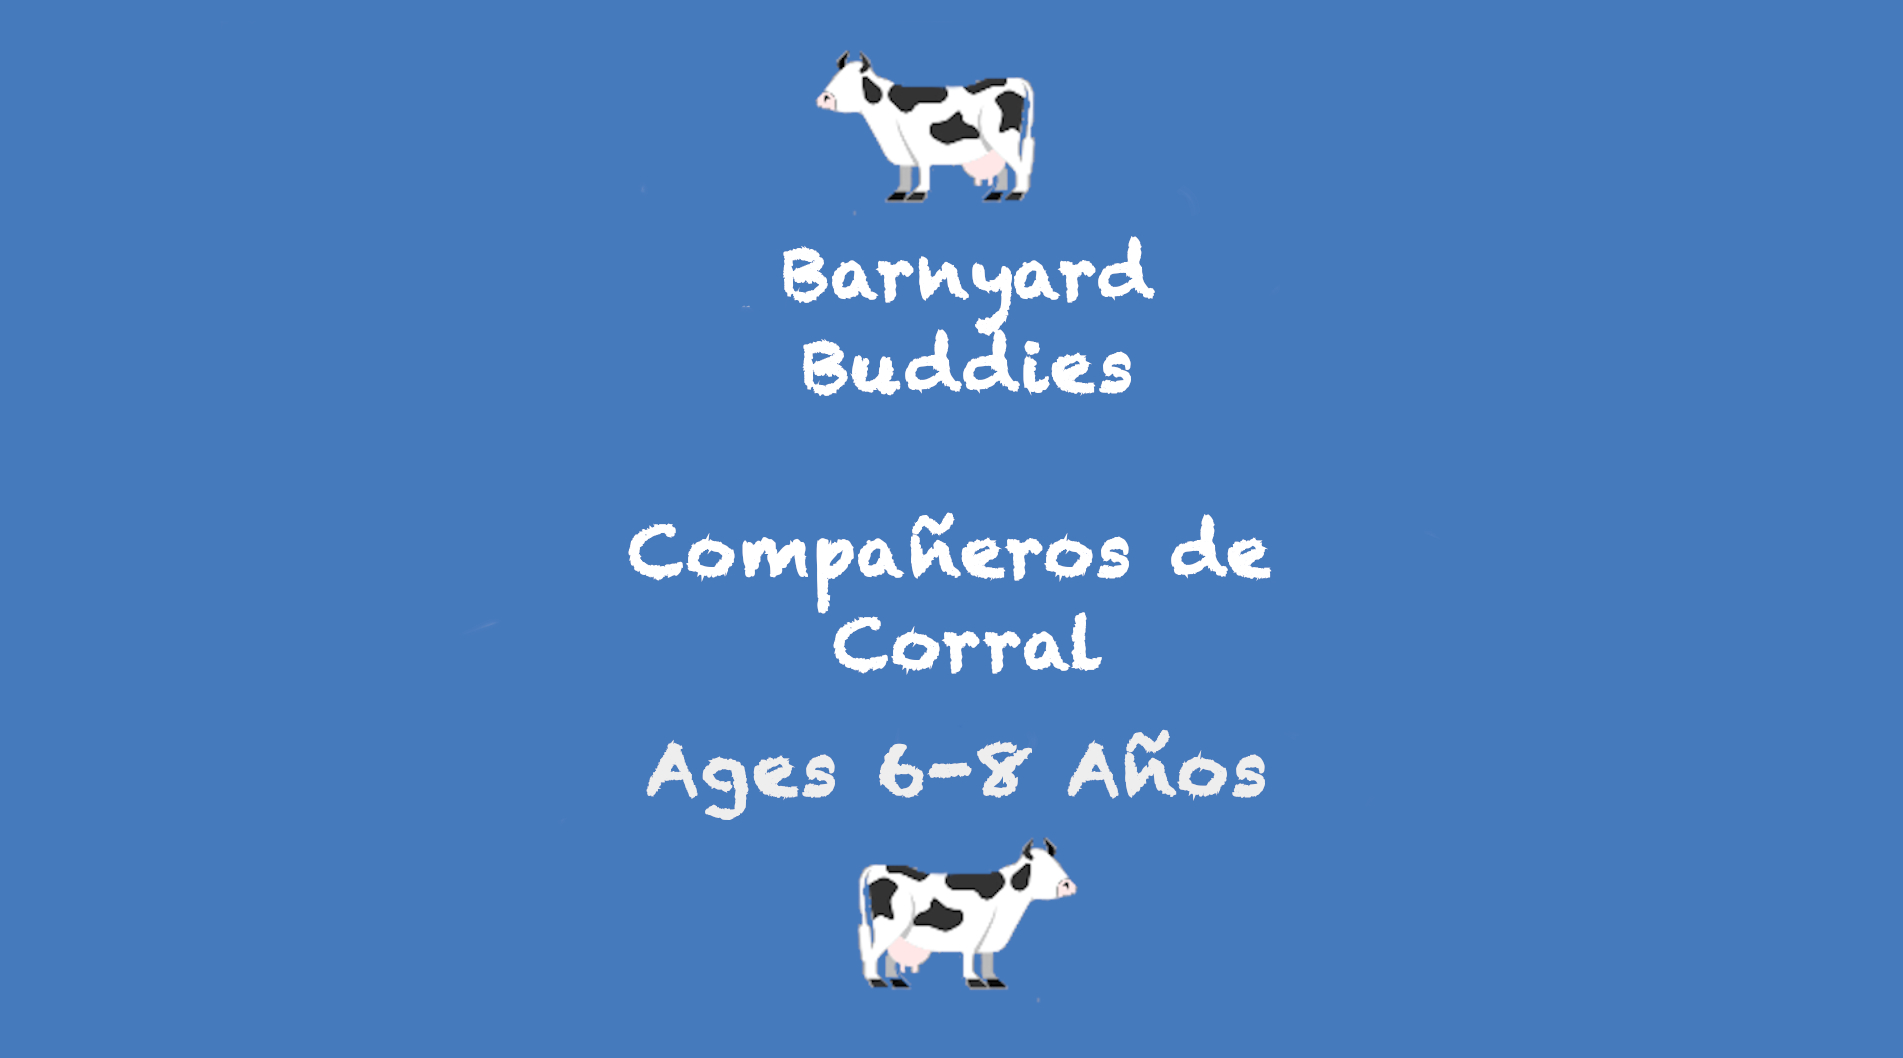 Barnyard Buddies for 6-8 year olds